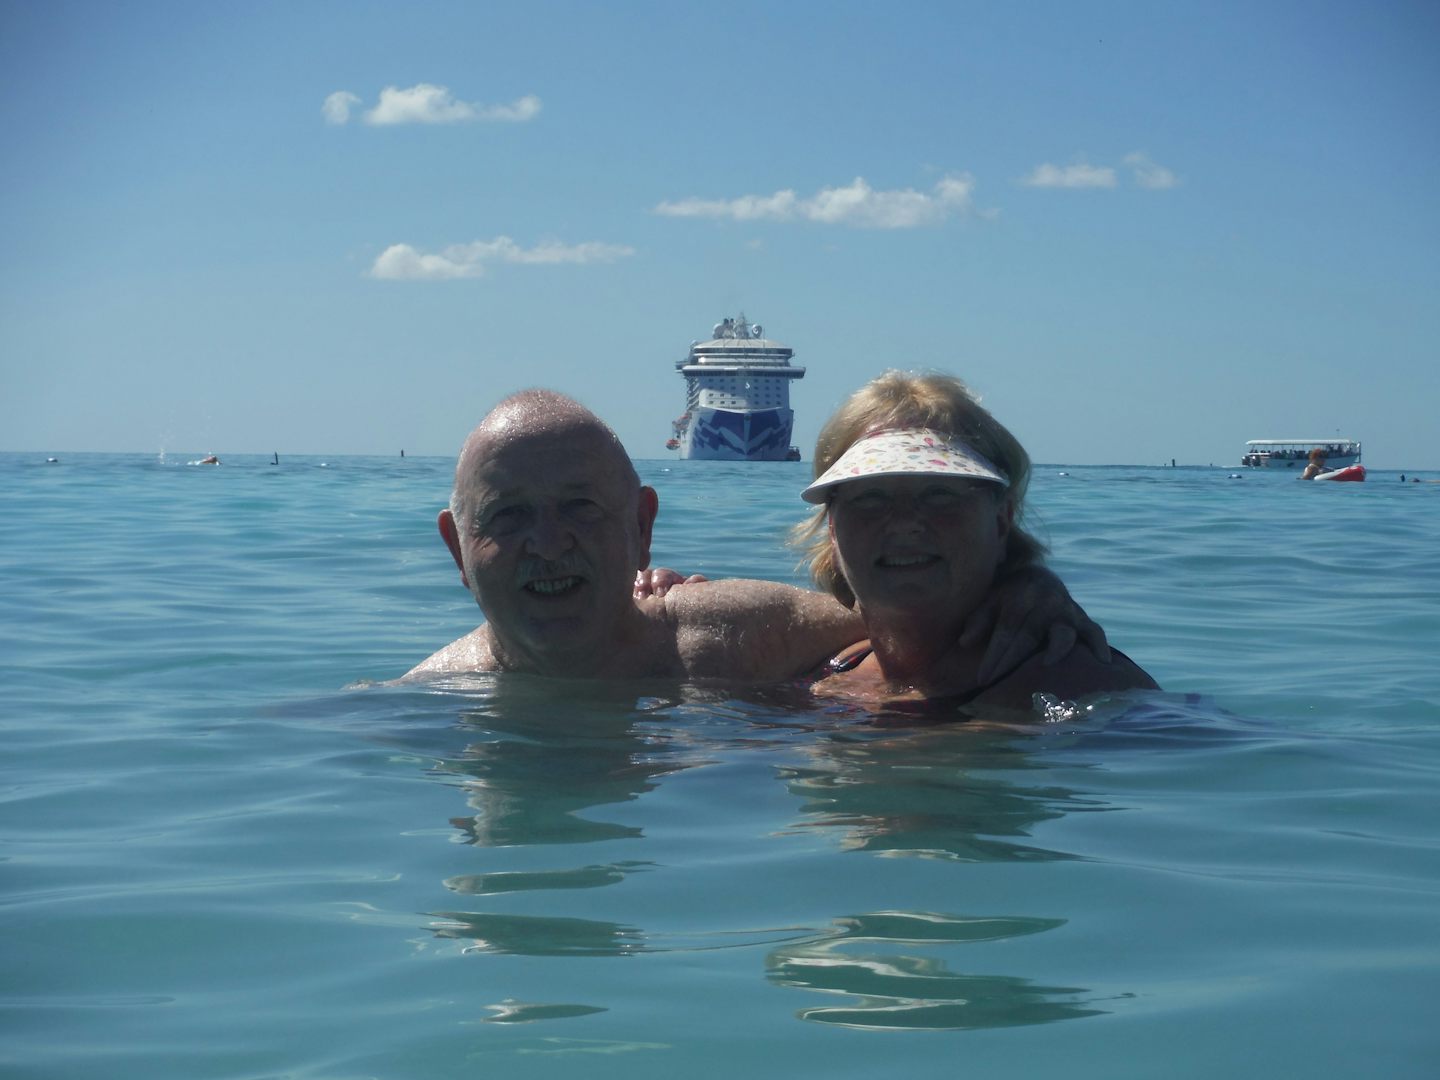 Bahamas enjoying warm water